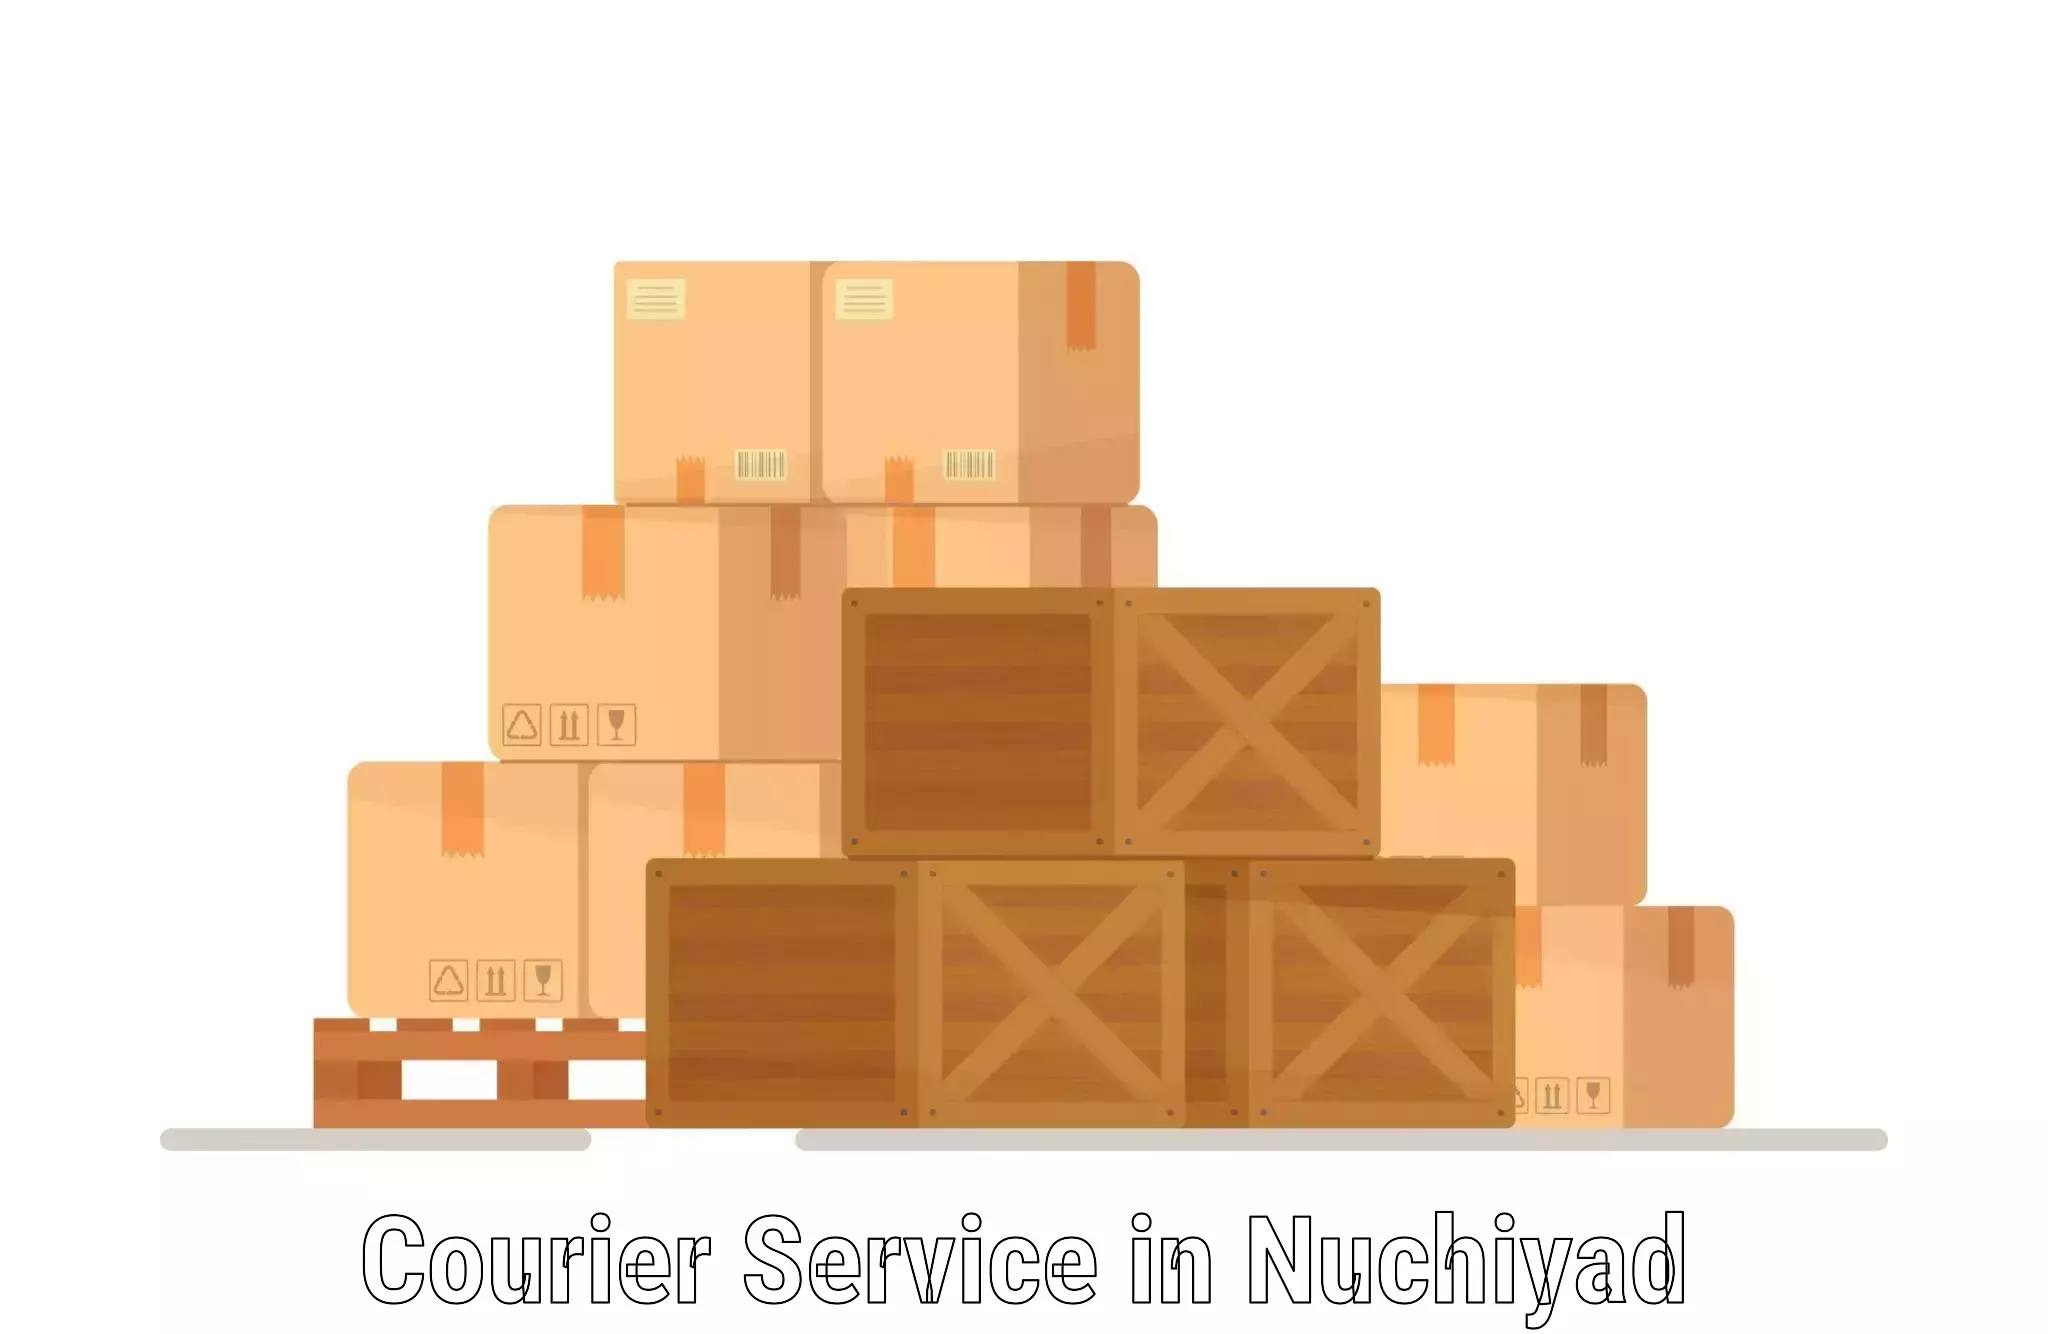 Speedy delivery service in Nuchiyad